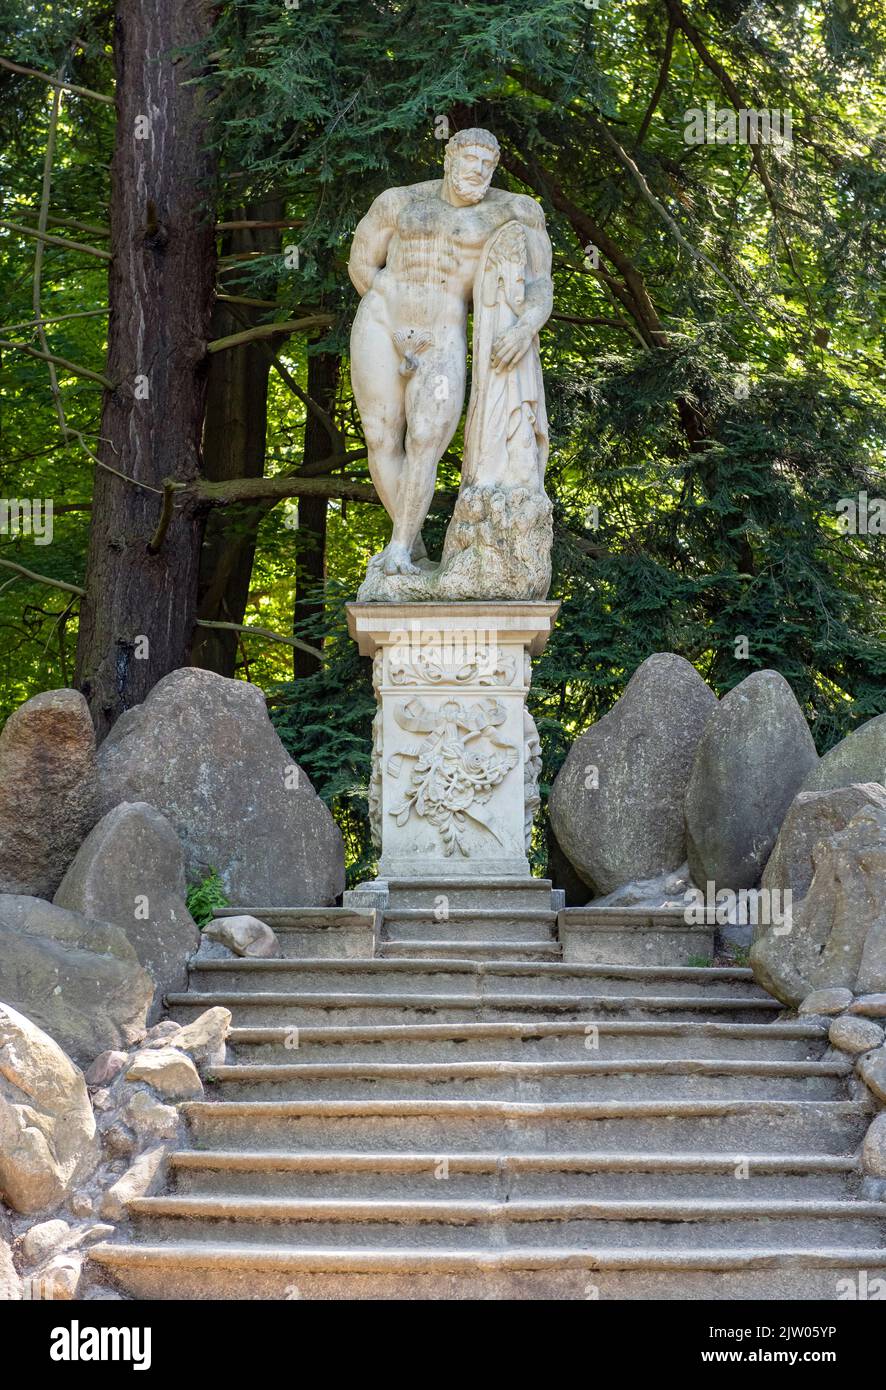 Farnese Hercules Sculpture, Azalea and Rhododendron Park Kromlau, Germany Stock Photo